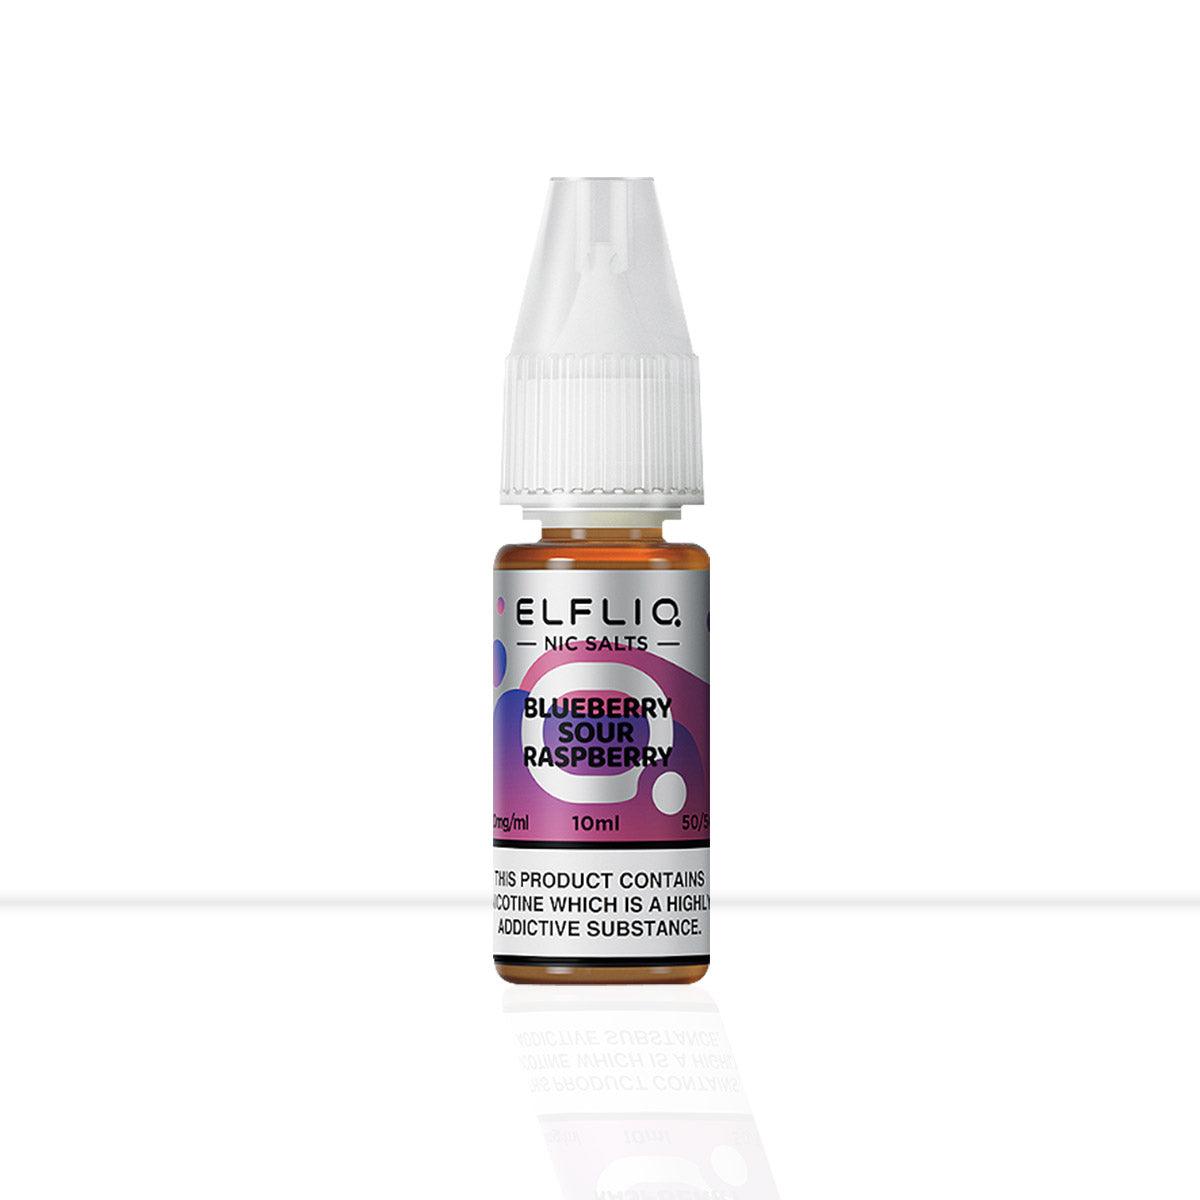 Blueberry Sour Raspberry: Purple Elfliq Nic Salt E-Liquid